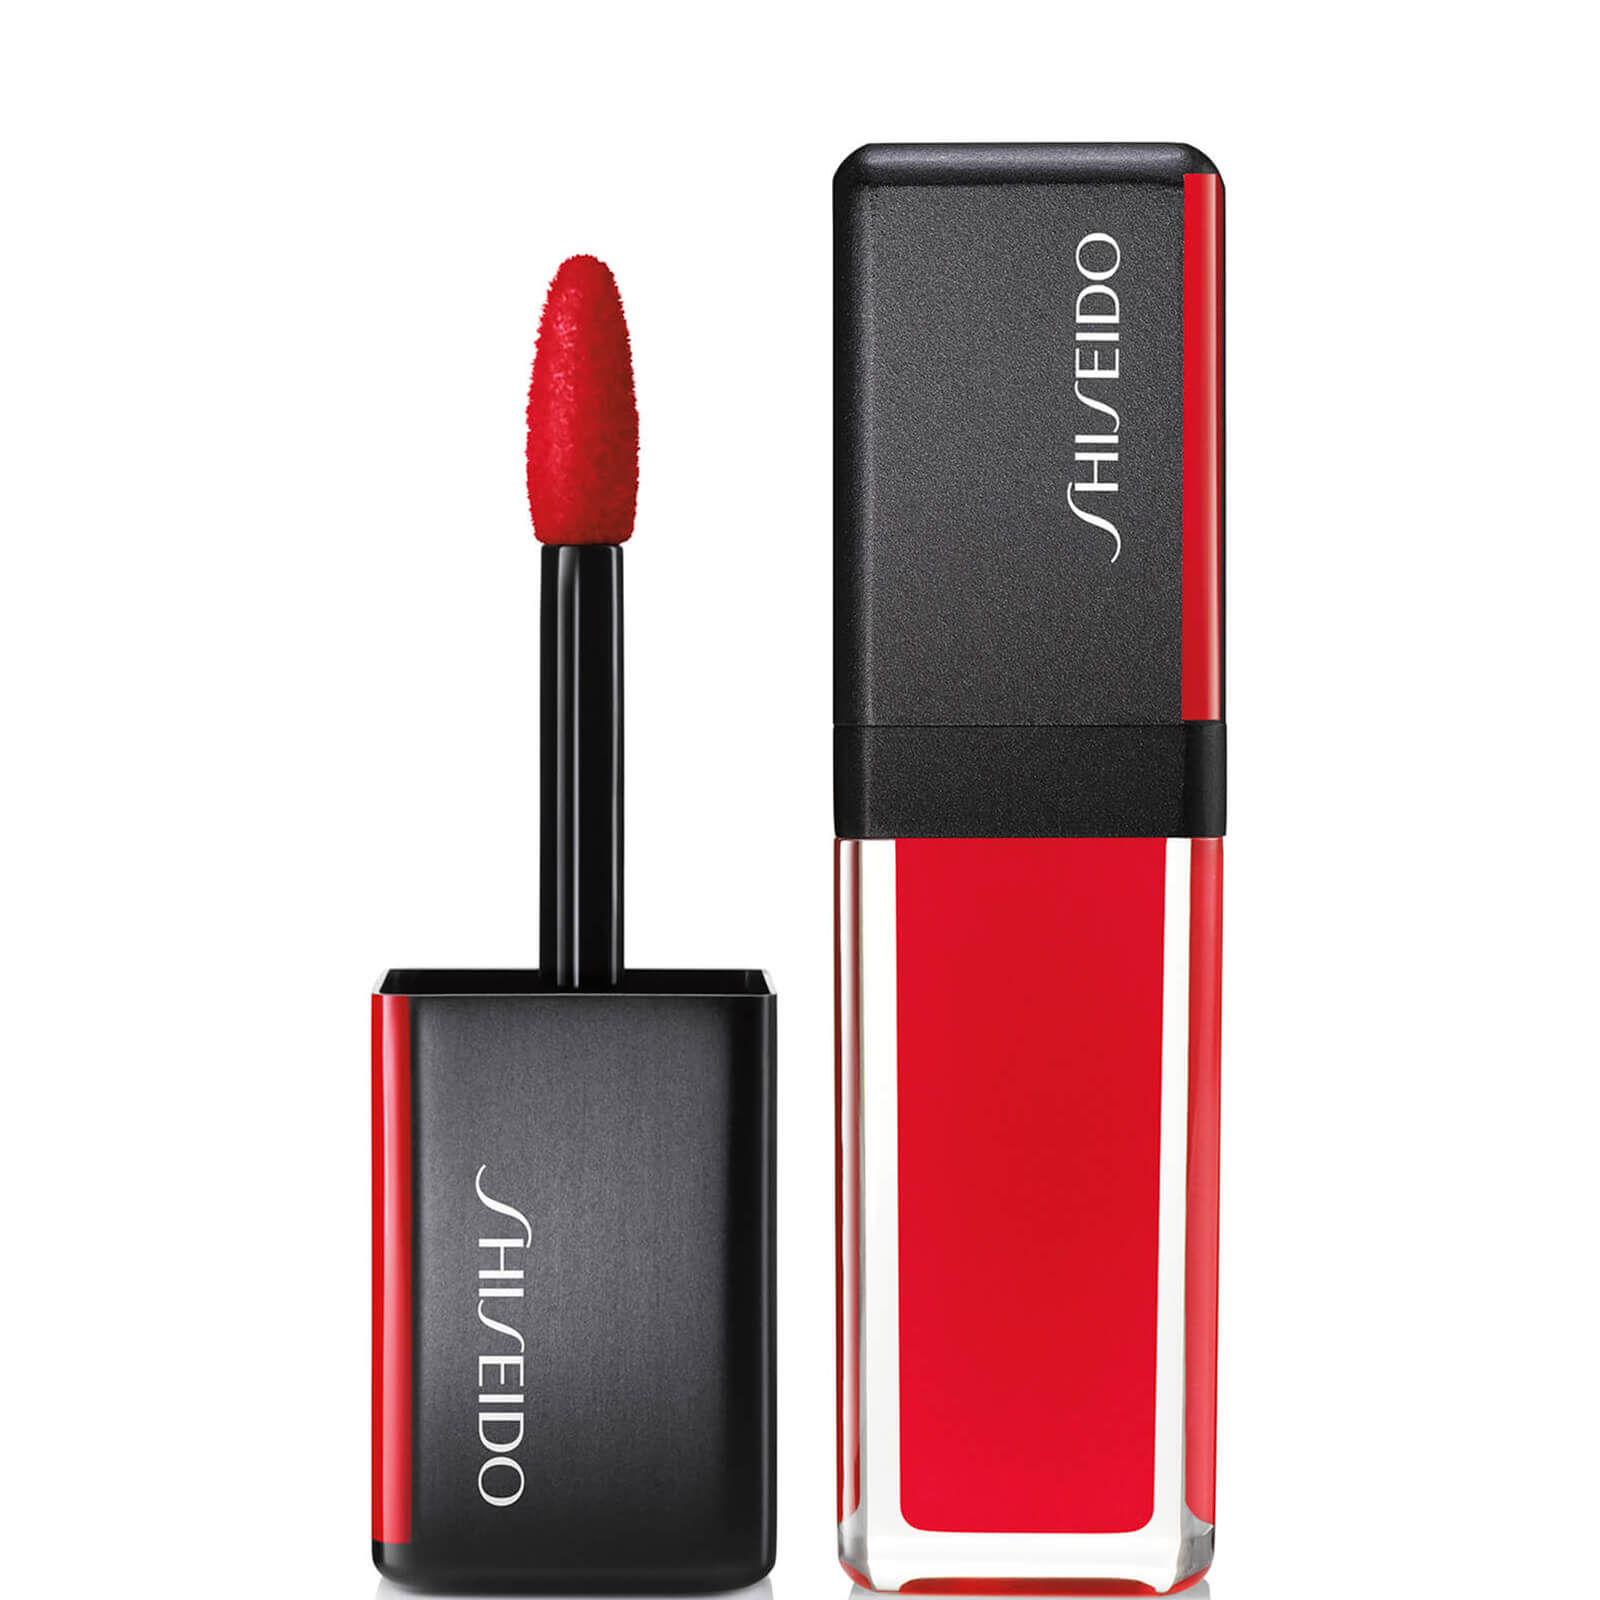 Image of Shiseido LacquerInk gloss labbra (varie tonalità) - Techno Red 304